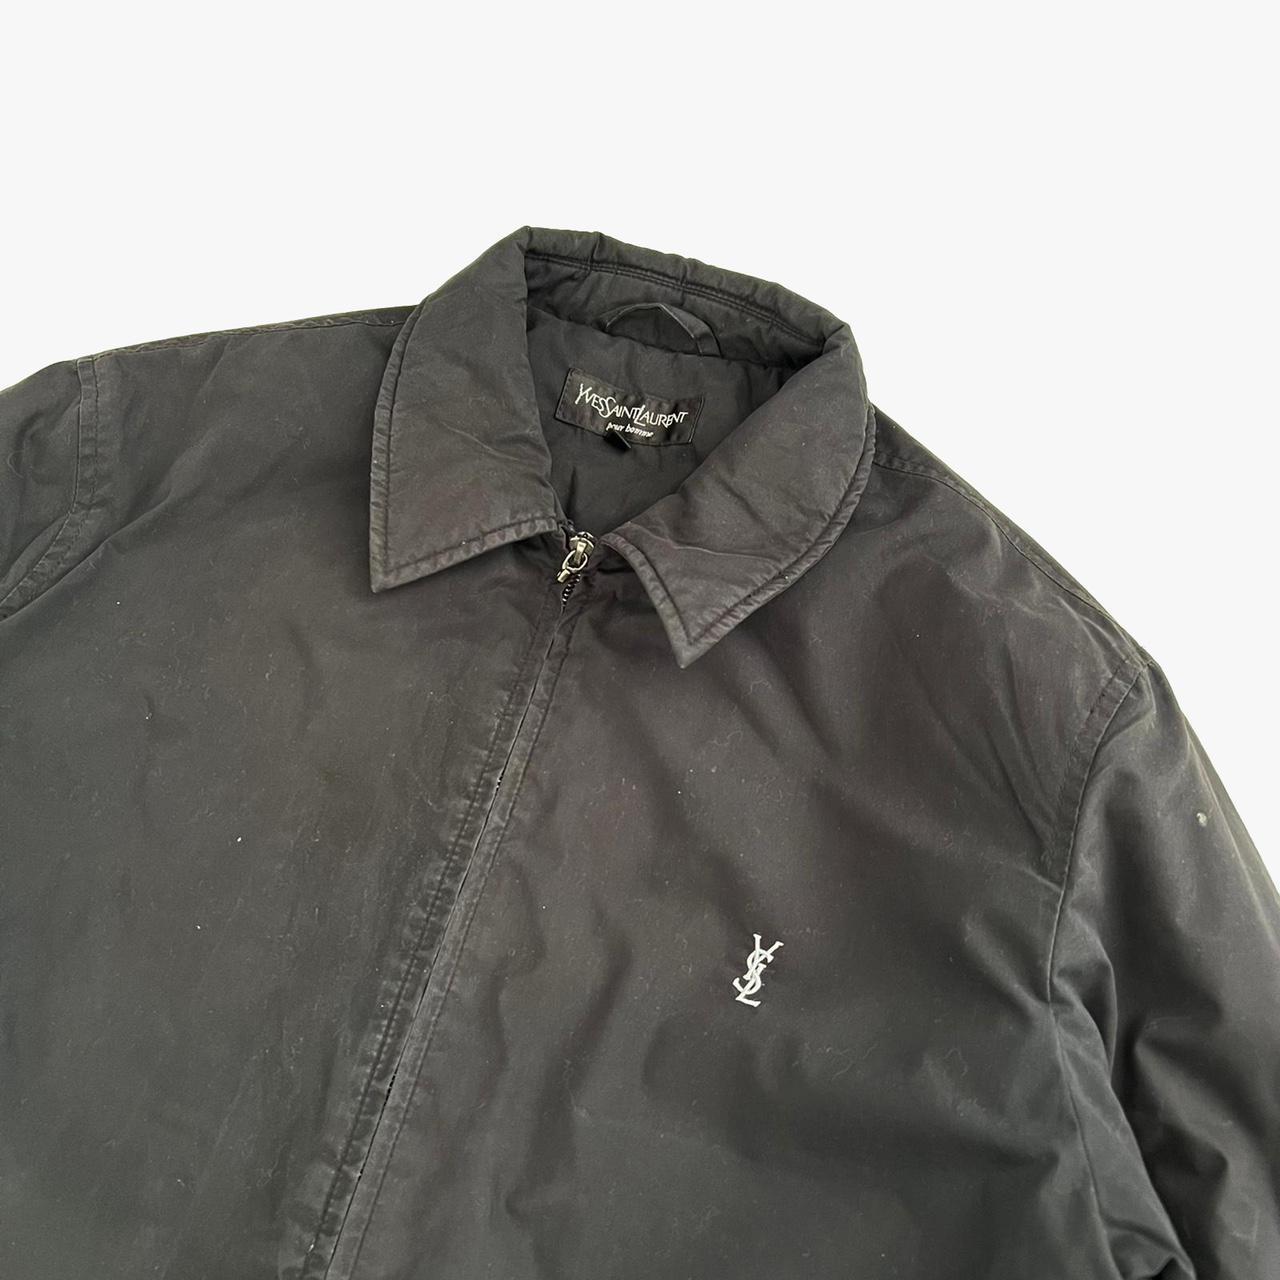 Vintage YSL jacket. Size medium/ large. Item is in... - Depop